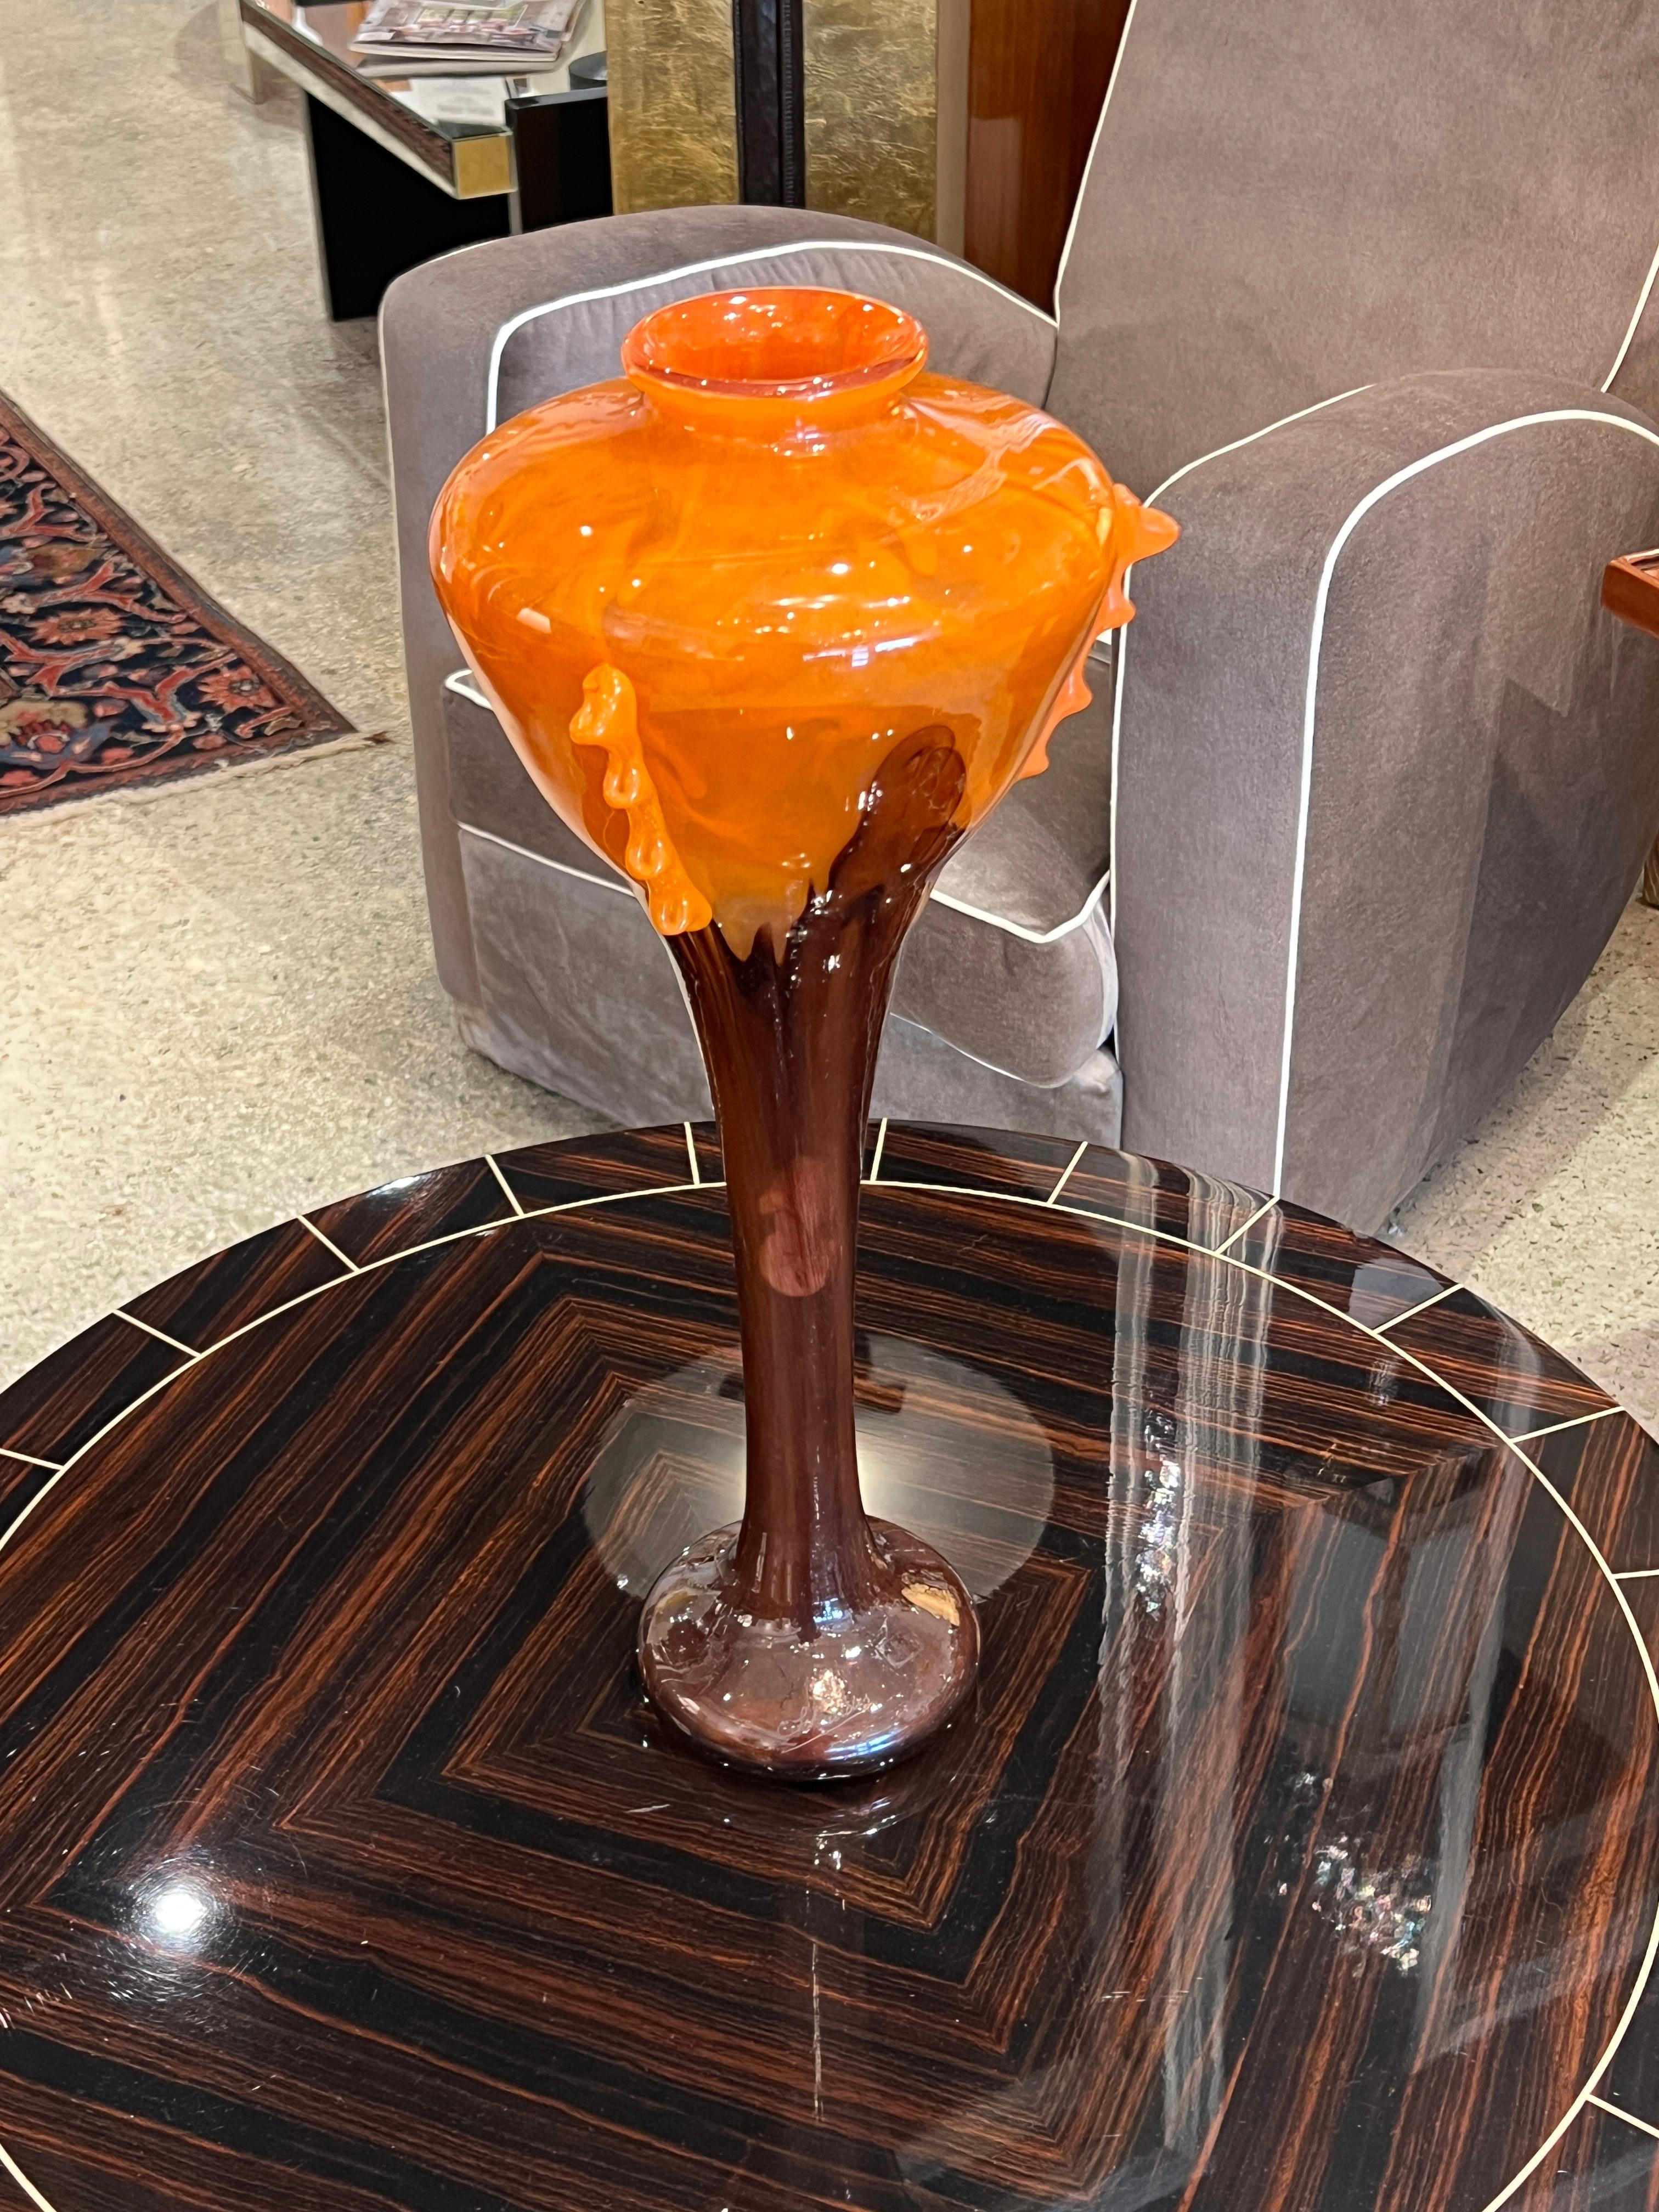 Art Deco slender glass vase in Burnt Orange hues with bright Orange applications details on sides of the piece.

Signed by Schneider.
